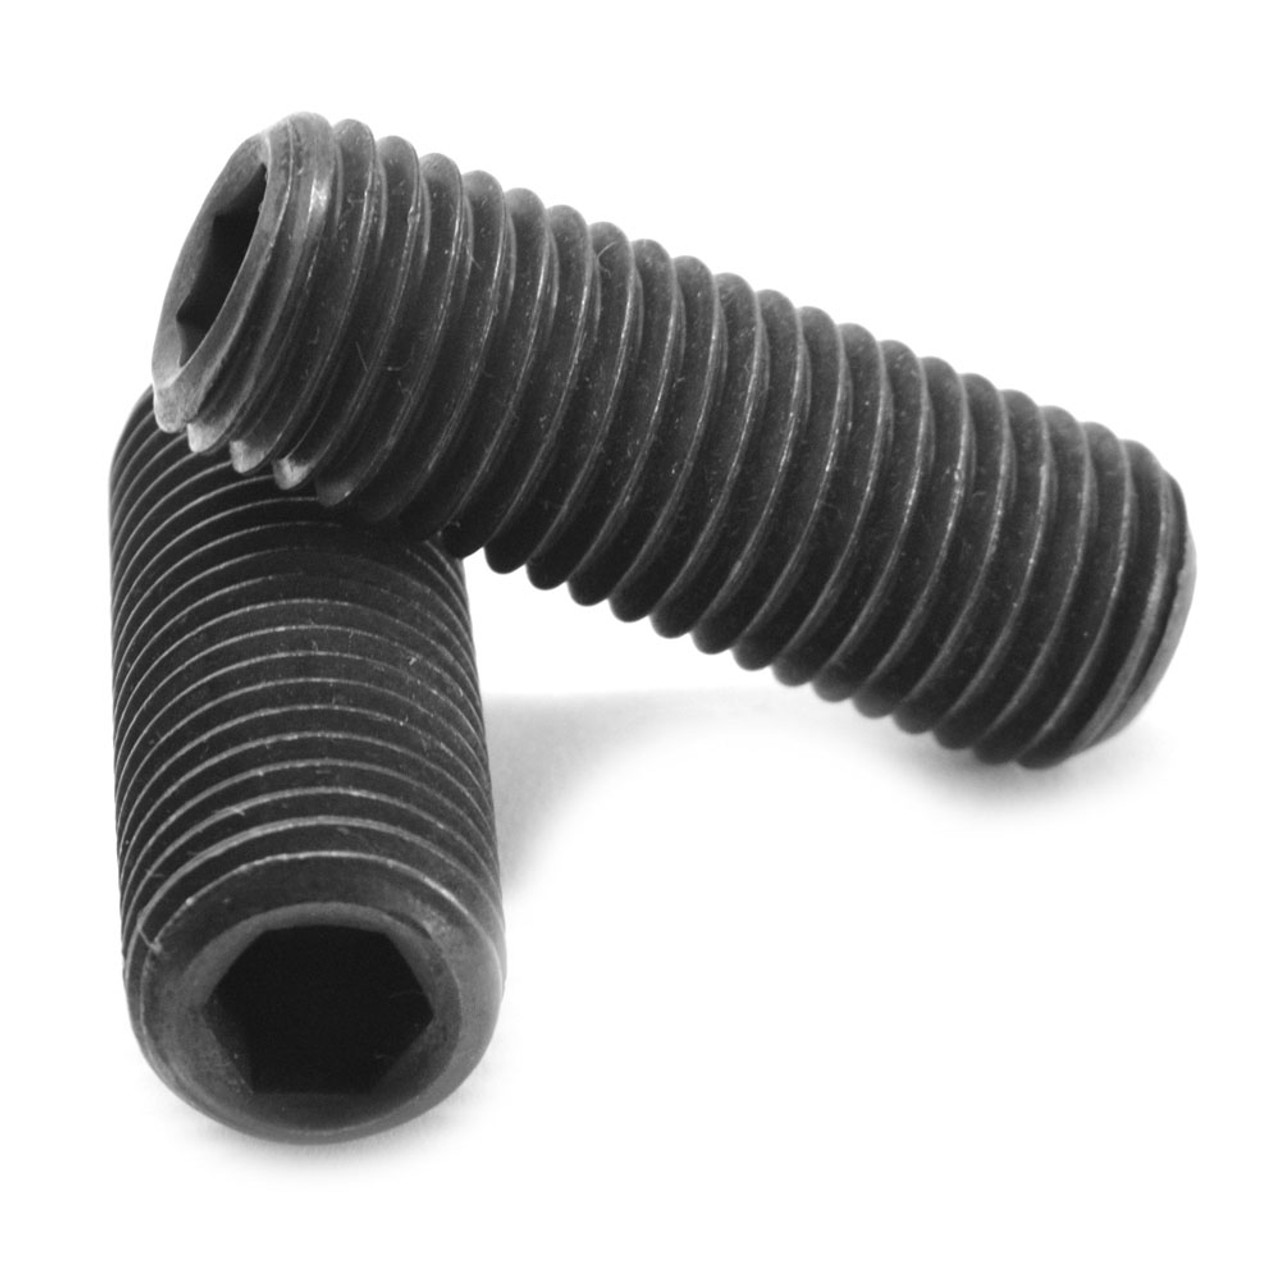 5/16"-18 x 1" Coarse Thread Socket Set Screw Cup Point Alloy Steel Black Oxide